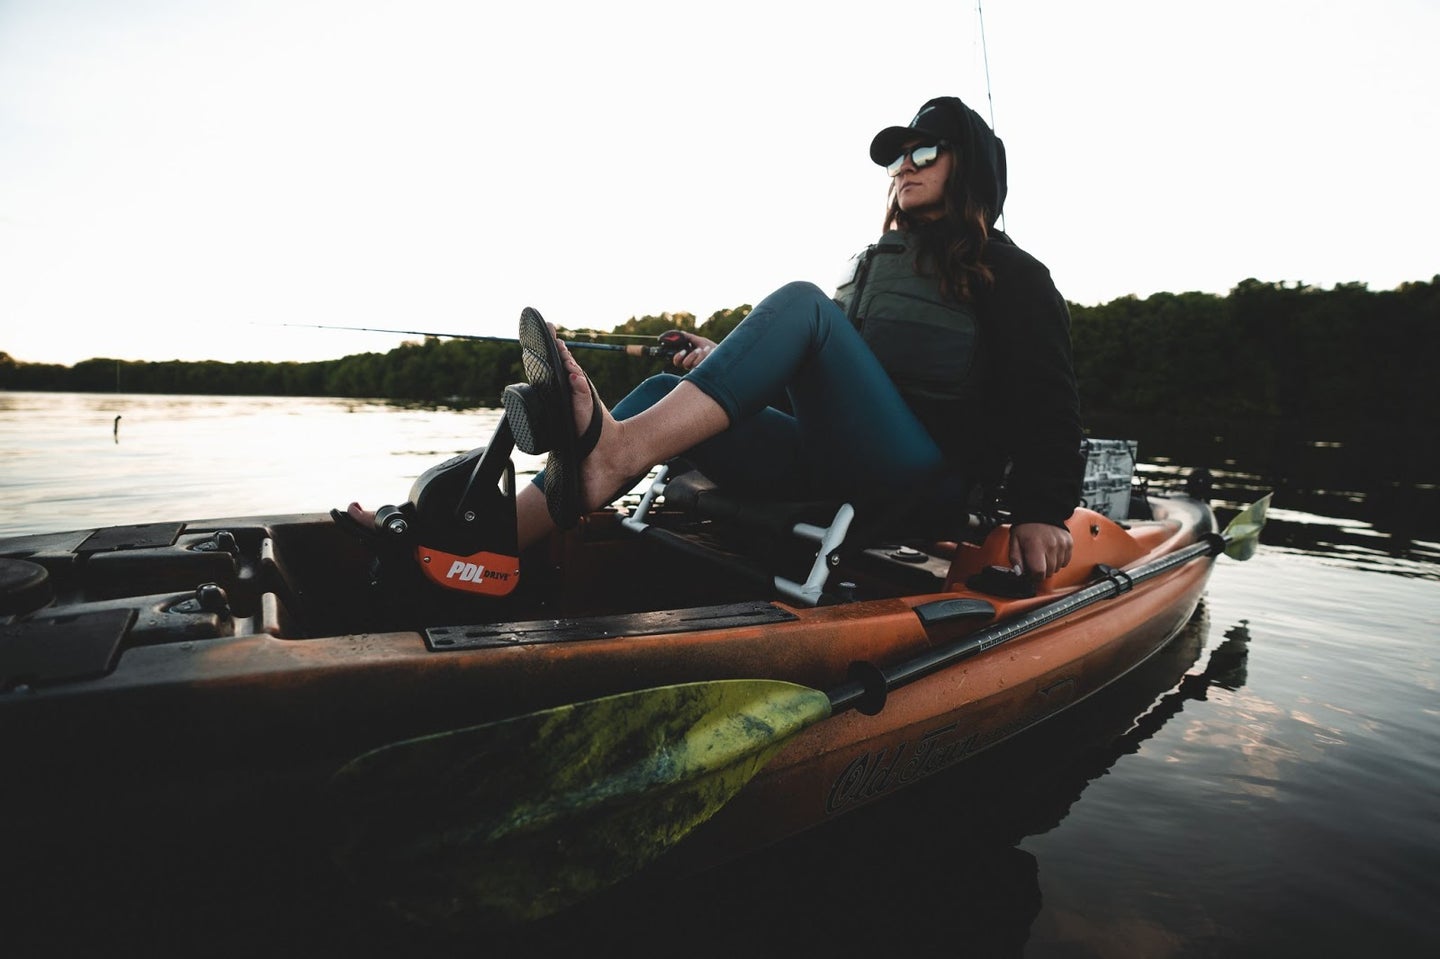 Woman on pedal kayak holding a fishing rod.